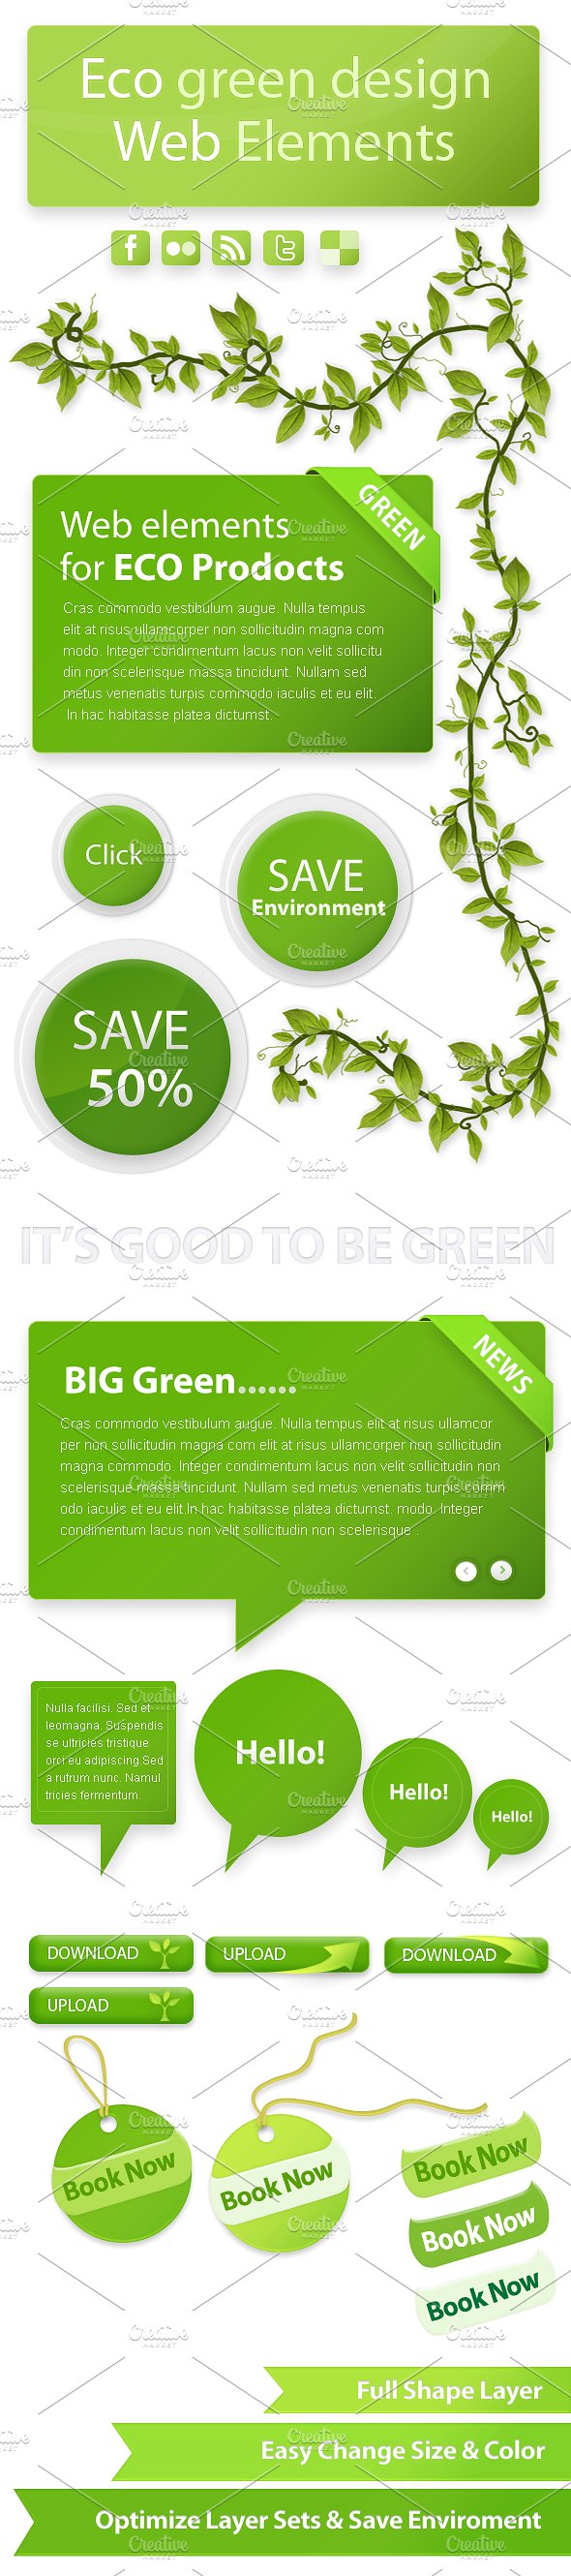 Eco Green Design